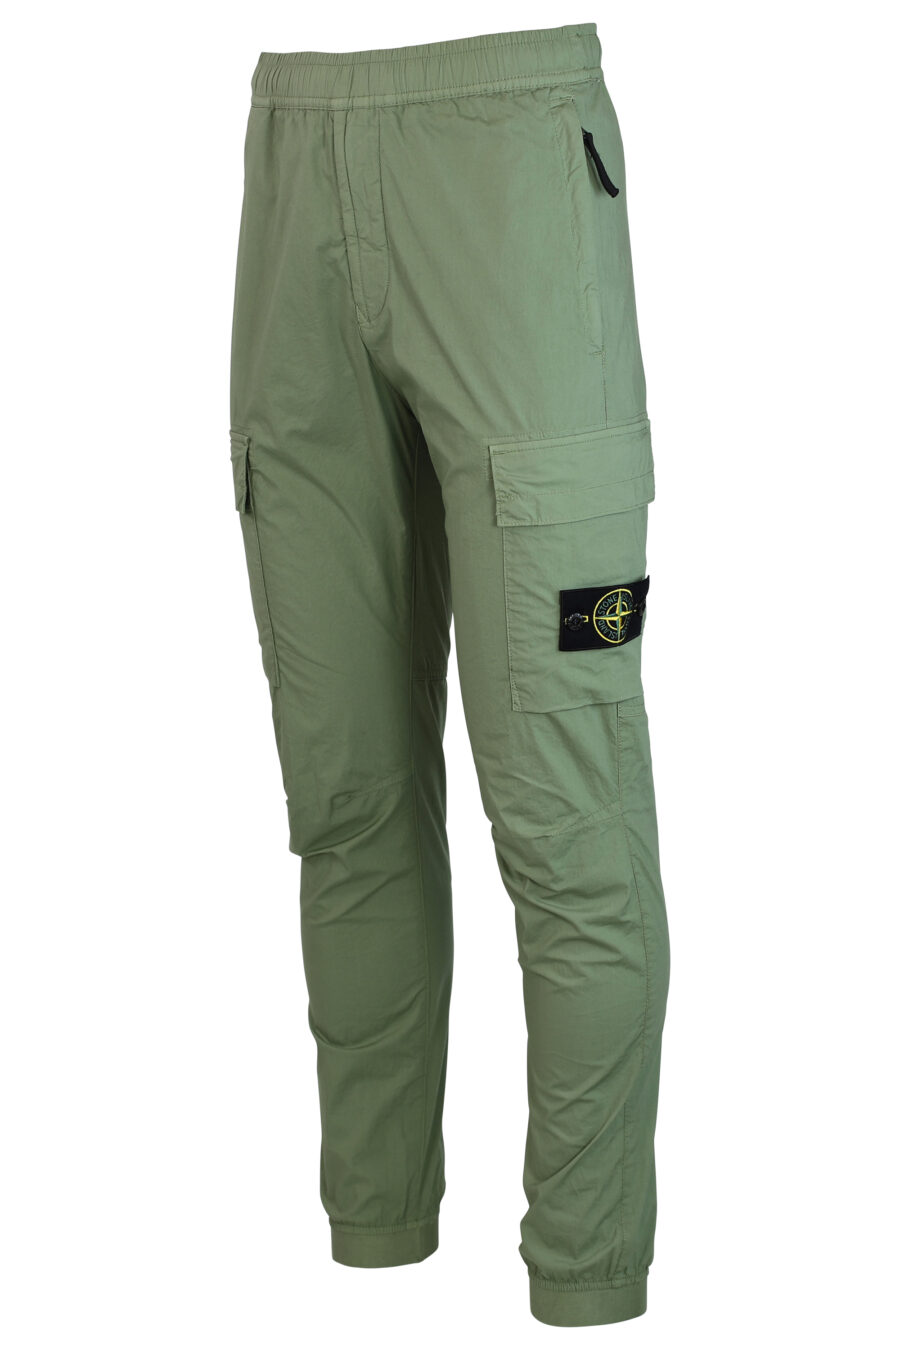 Pantalon cargo vert avec écusson - IMG 0284